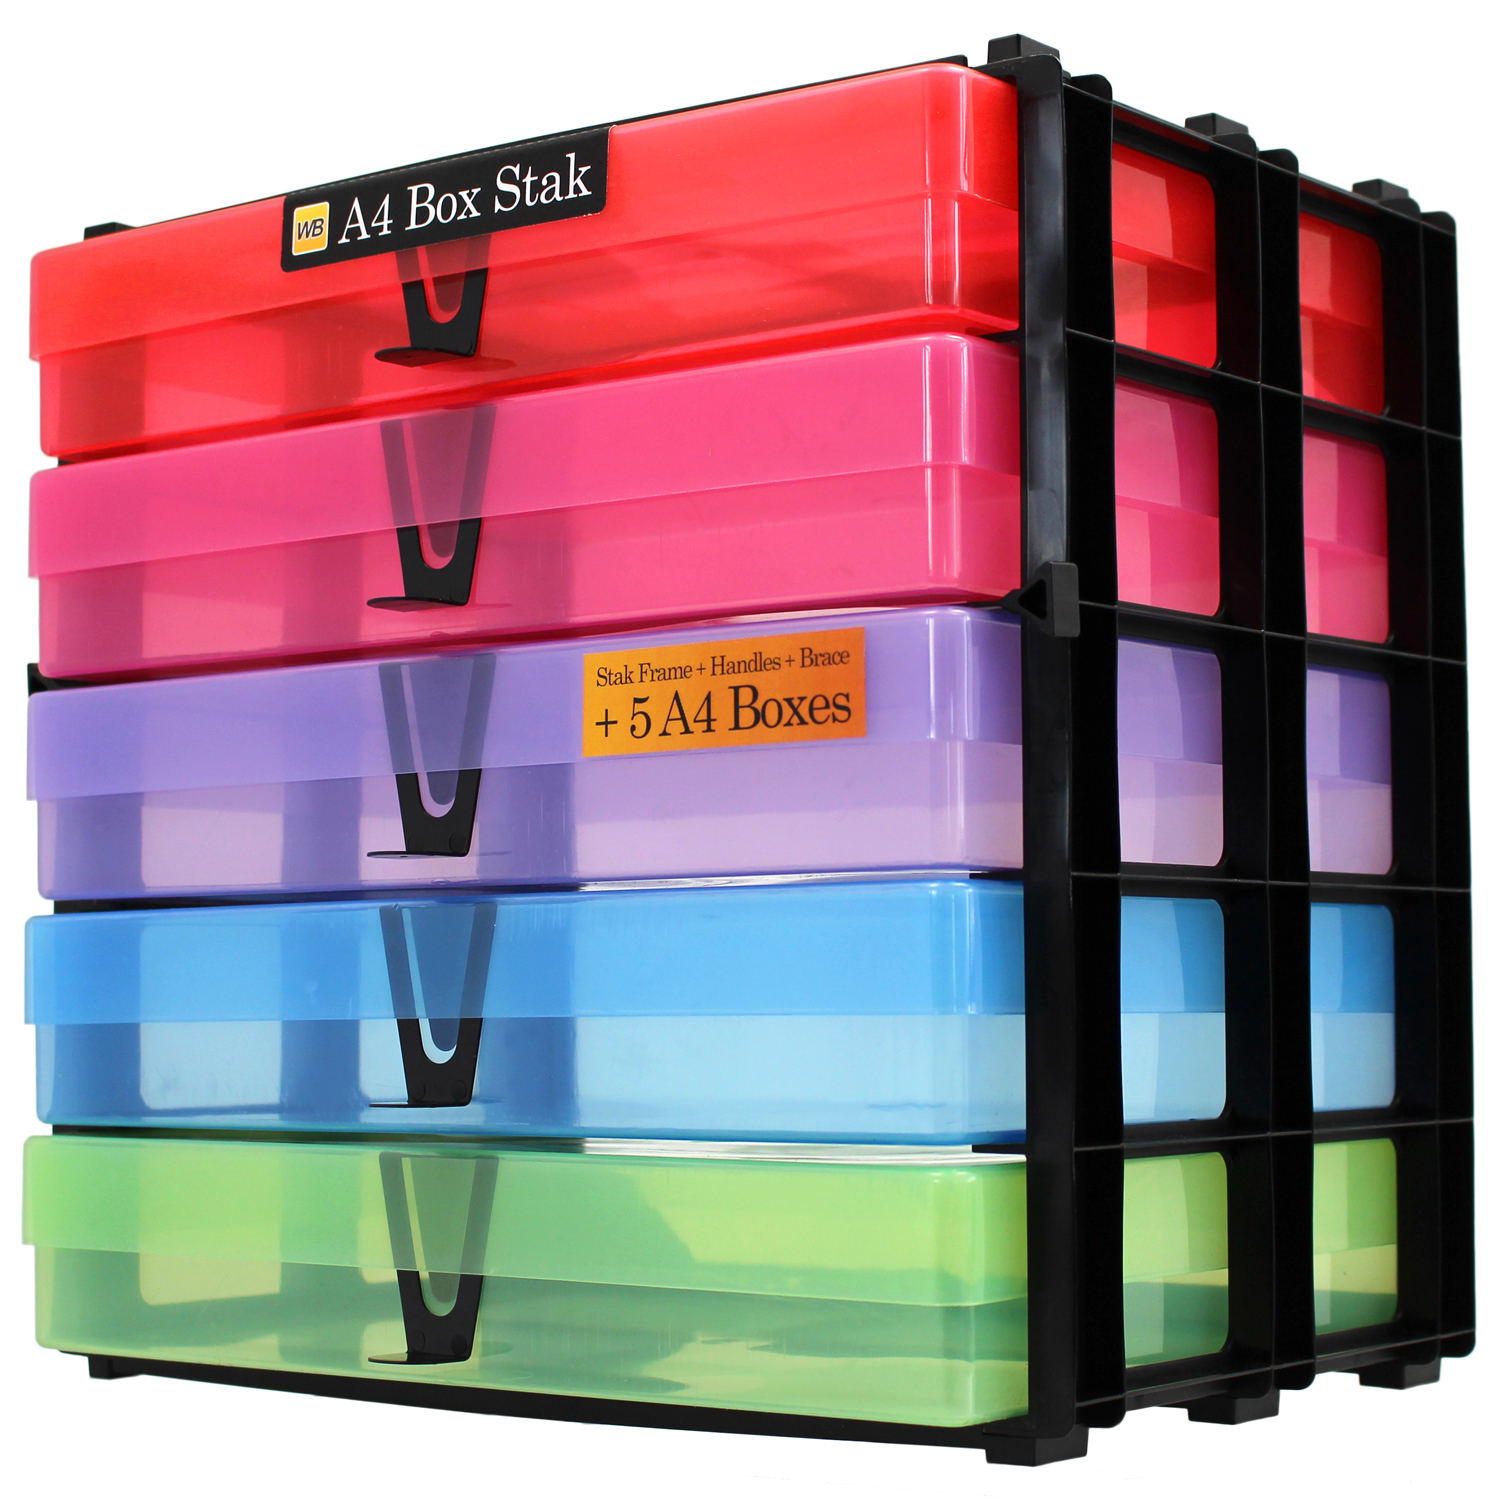 A4 Box Stak Craft Storage Unit, Transparent Boxes